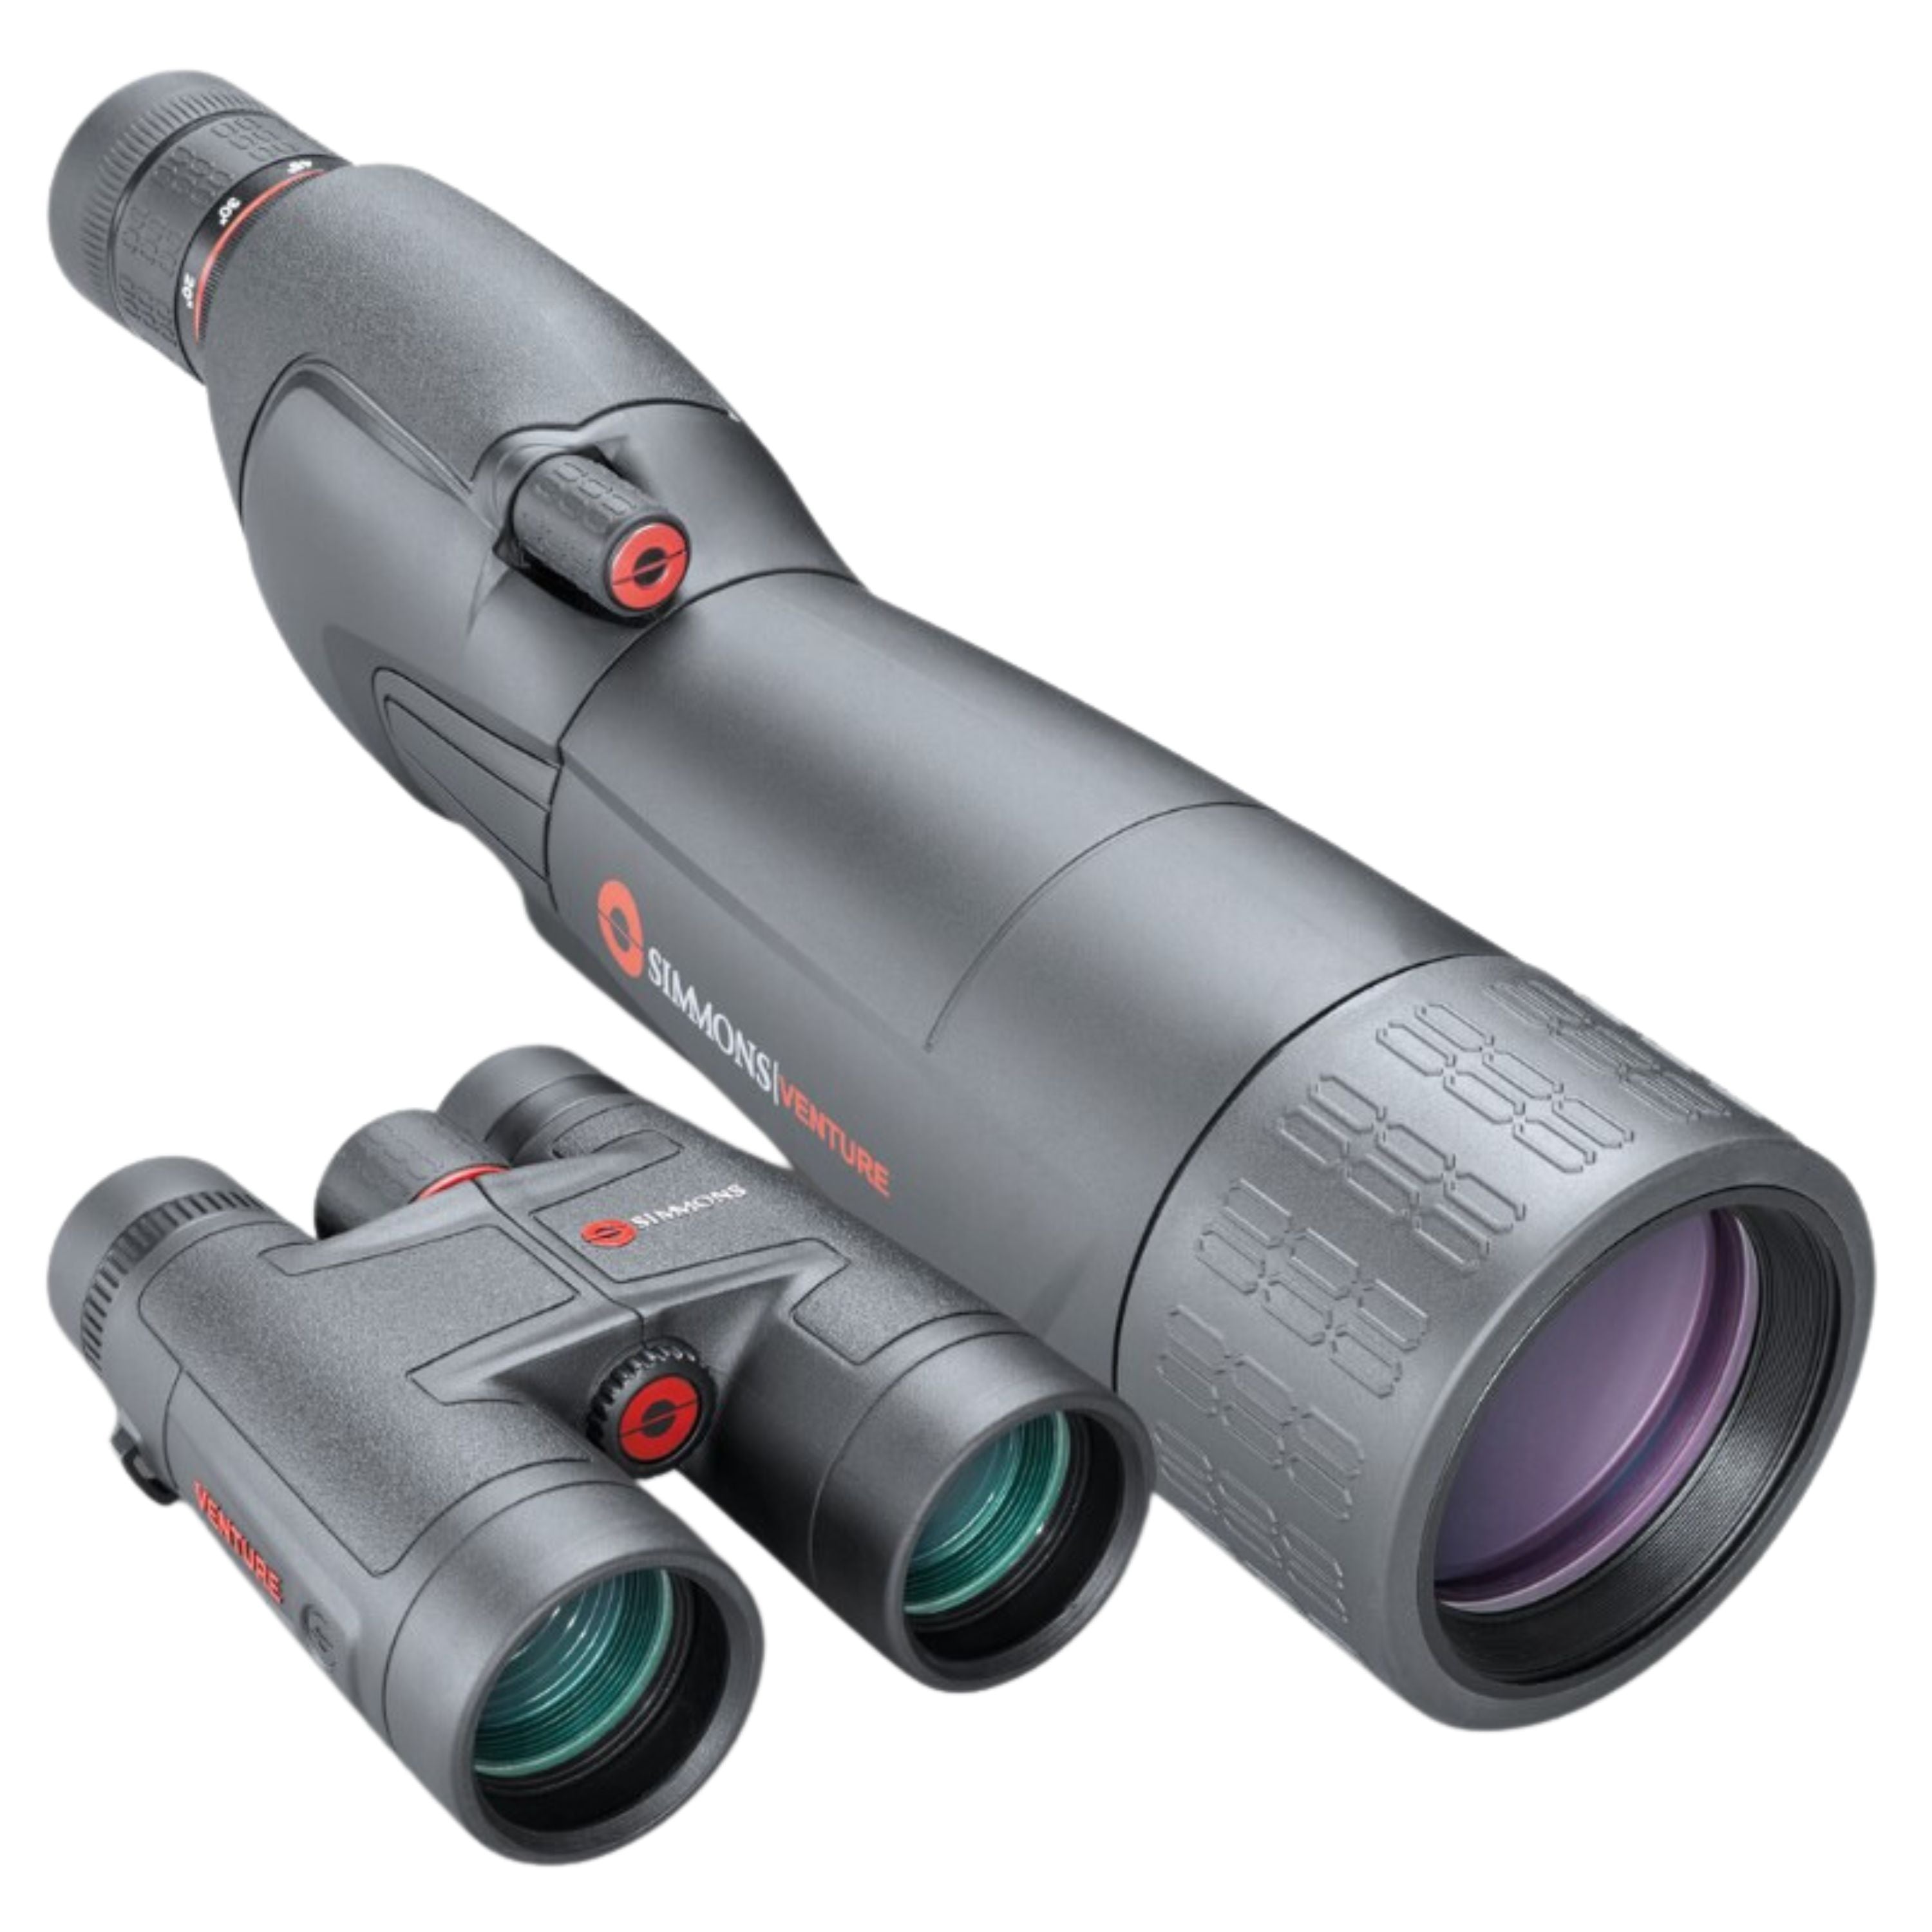 10x42 mm Binocular and "Venture" Spotting scope combo